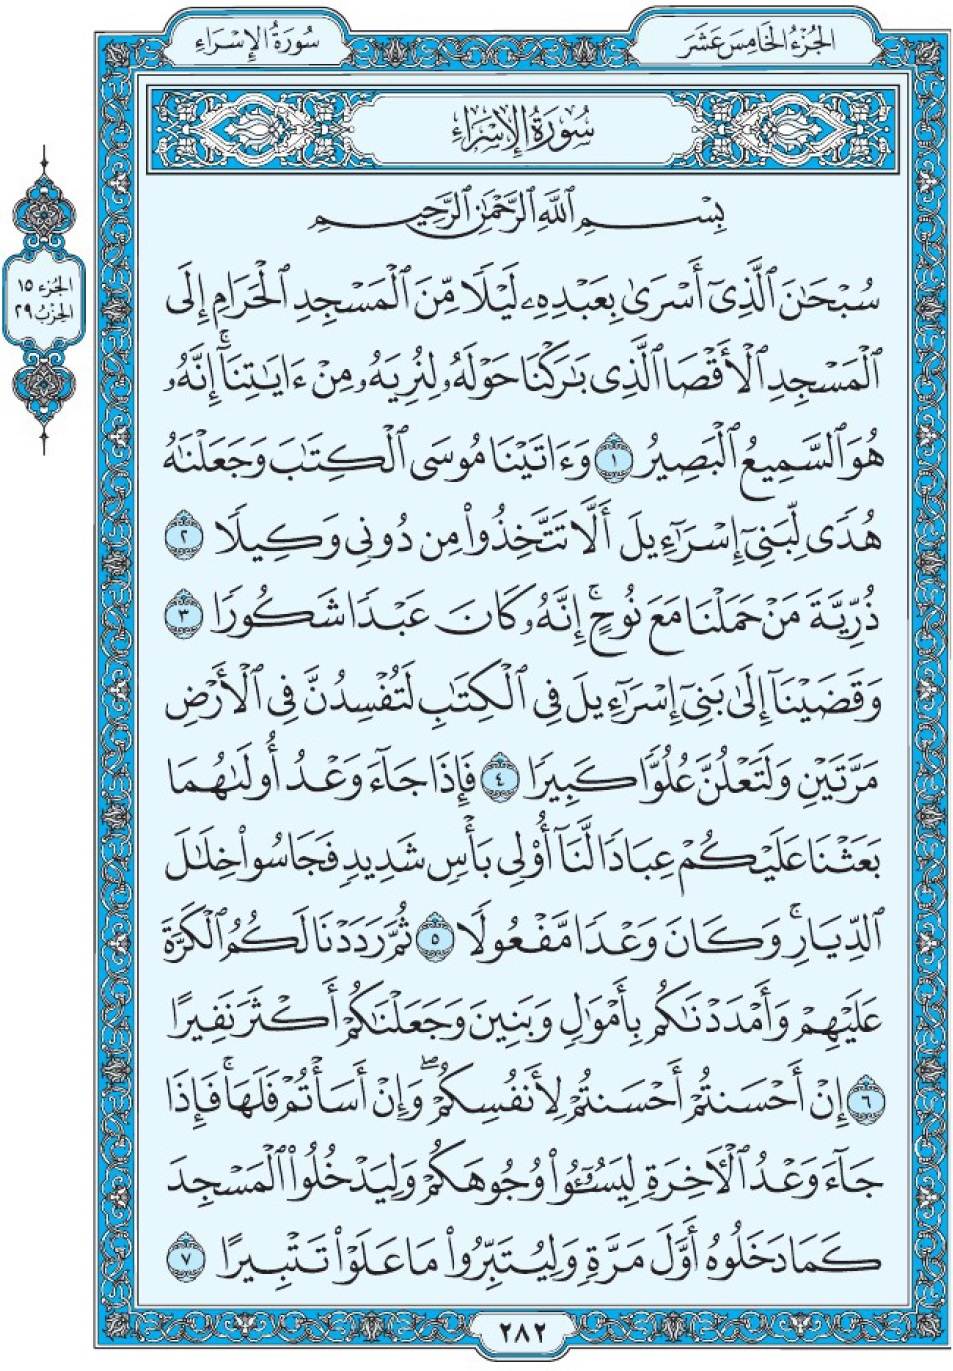 Сура 17 аль-Исра, Коран Мединский мусхаф страница 282, سورة ١٧ الإسراء